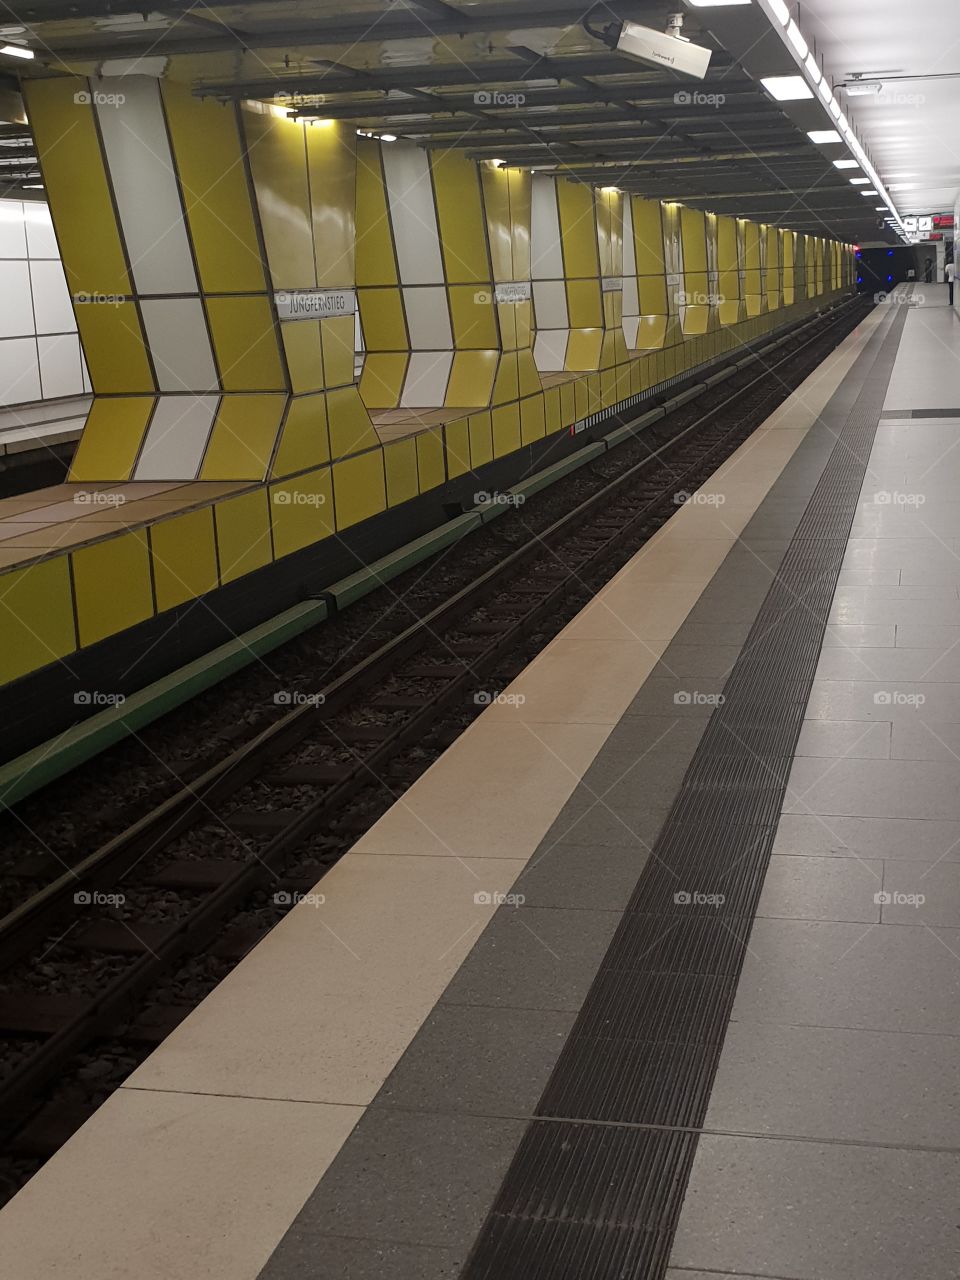 U-Bahn in Hamburg